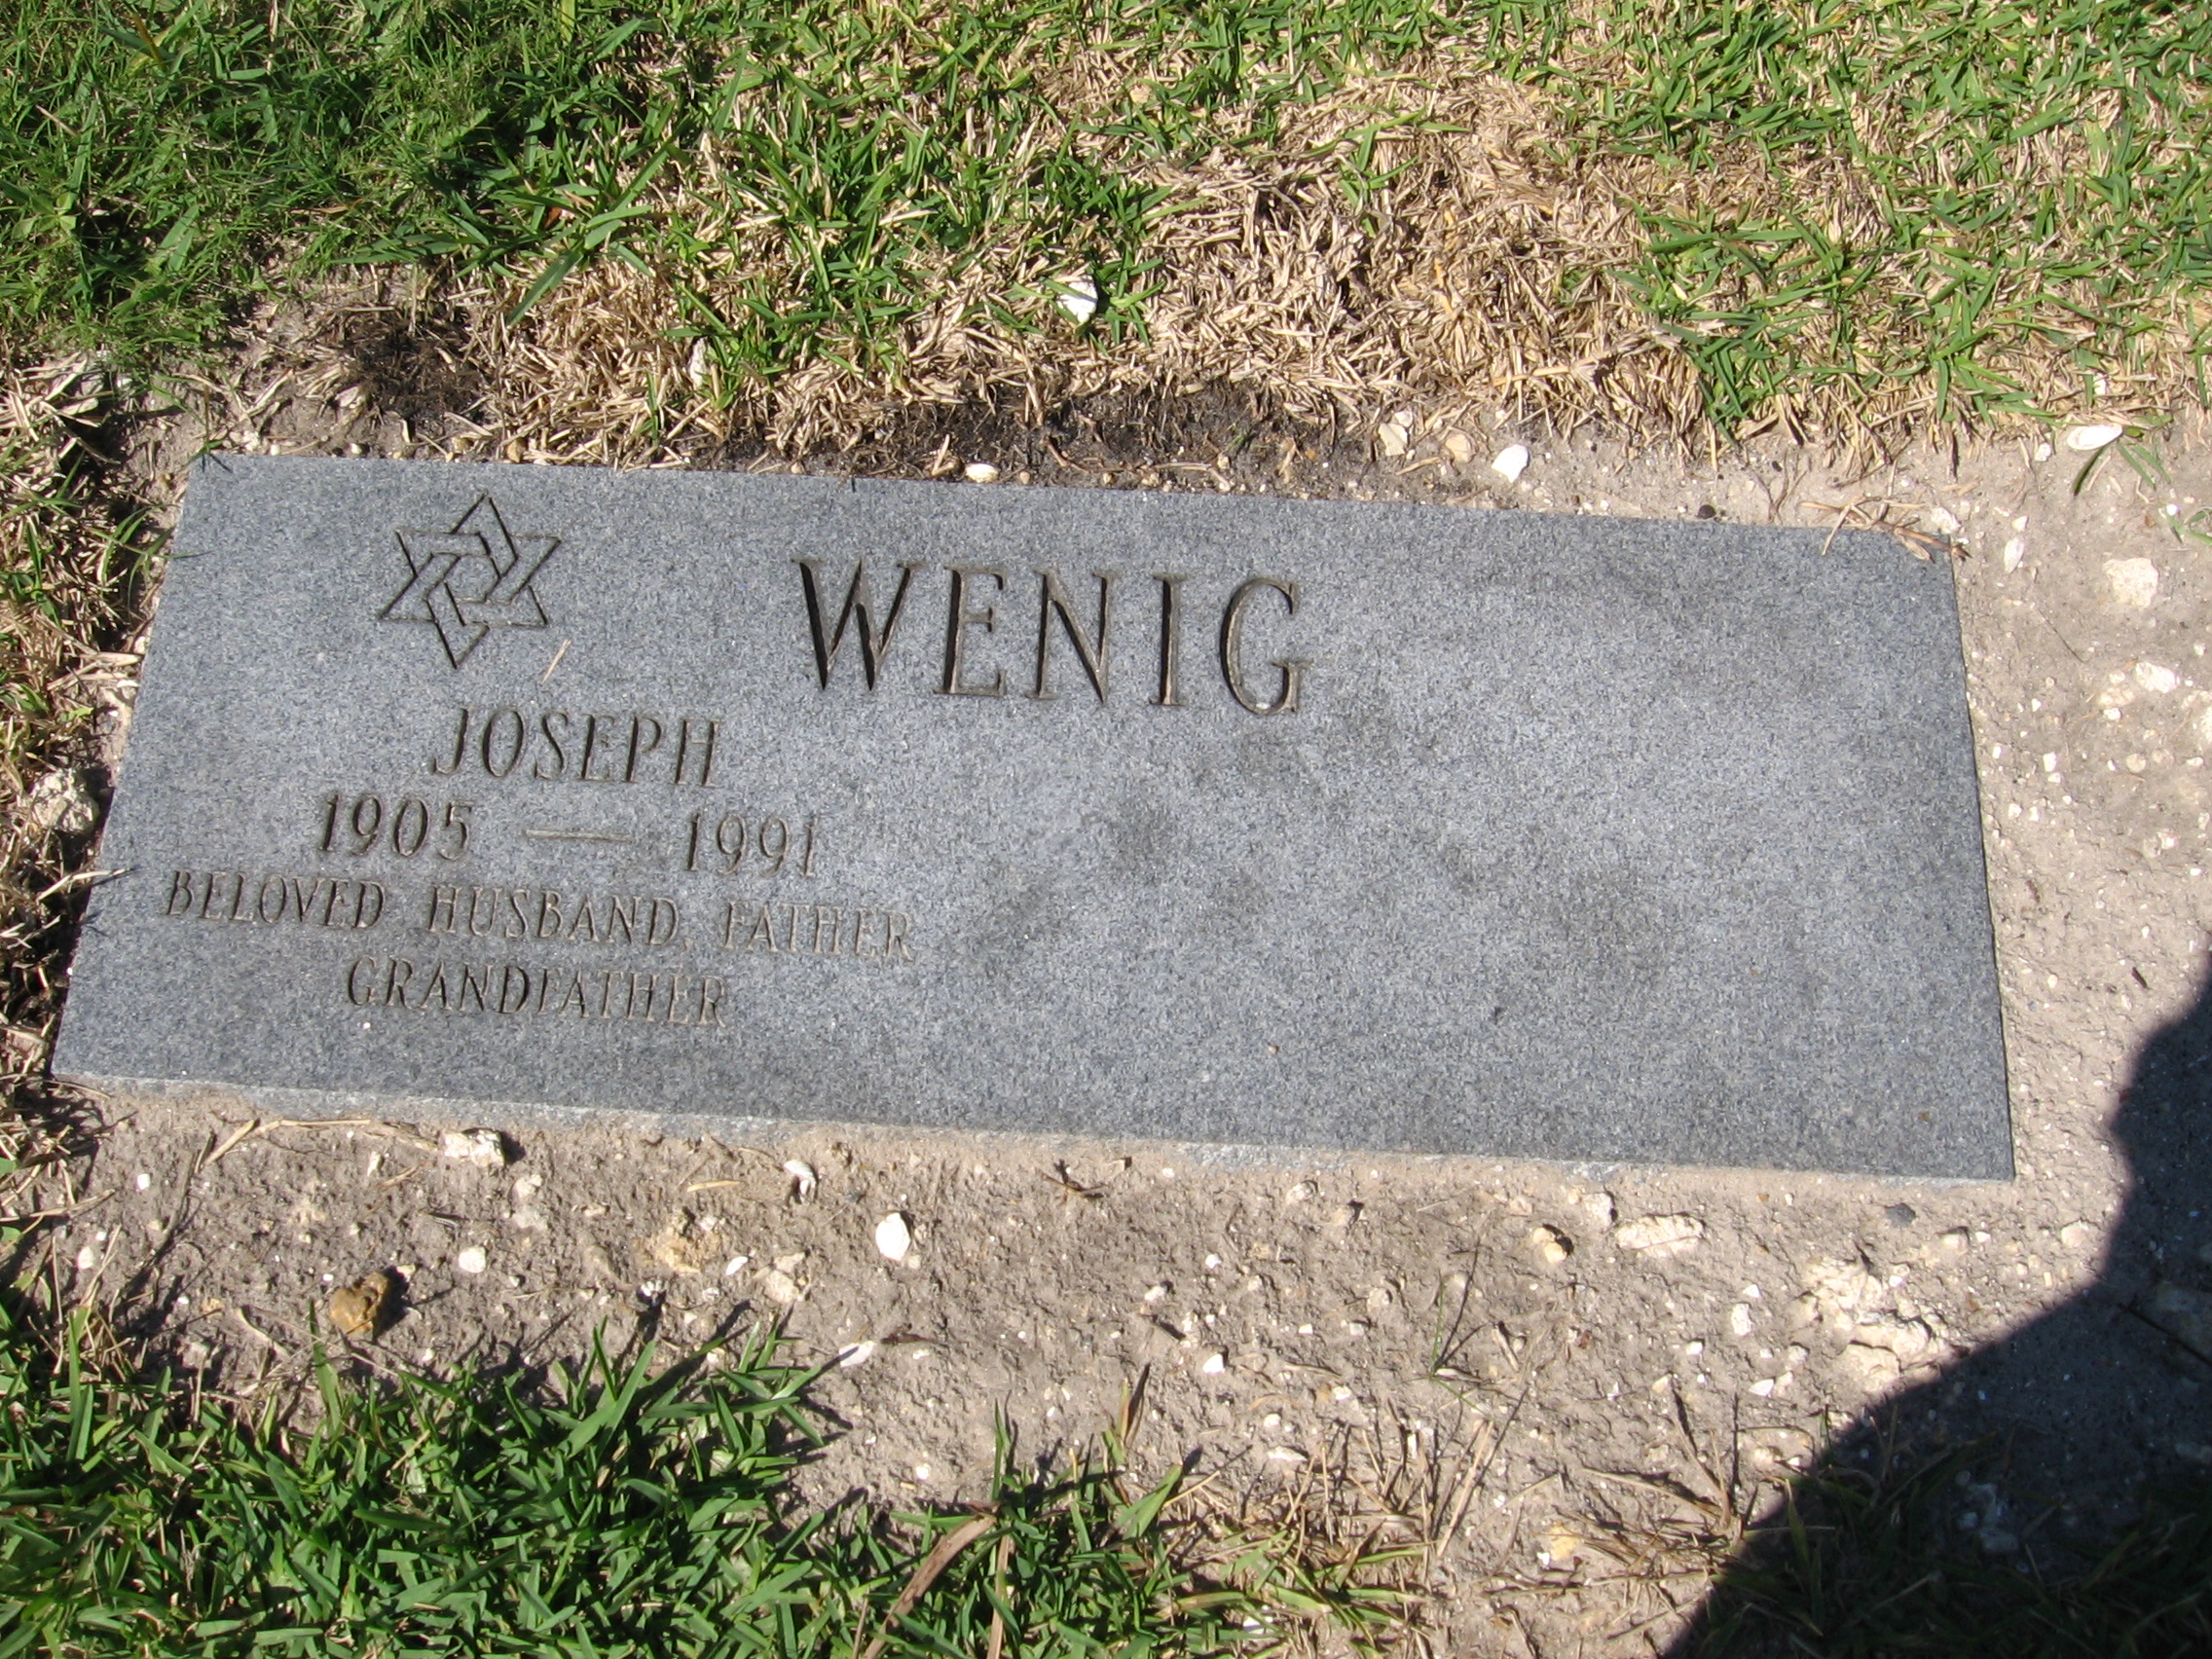 Joseph Wenig